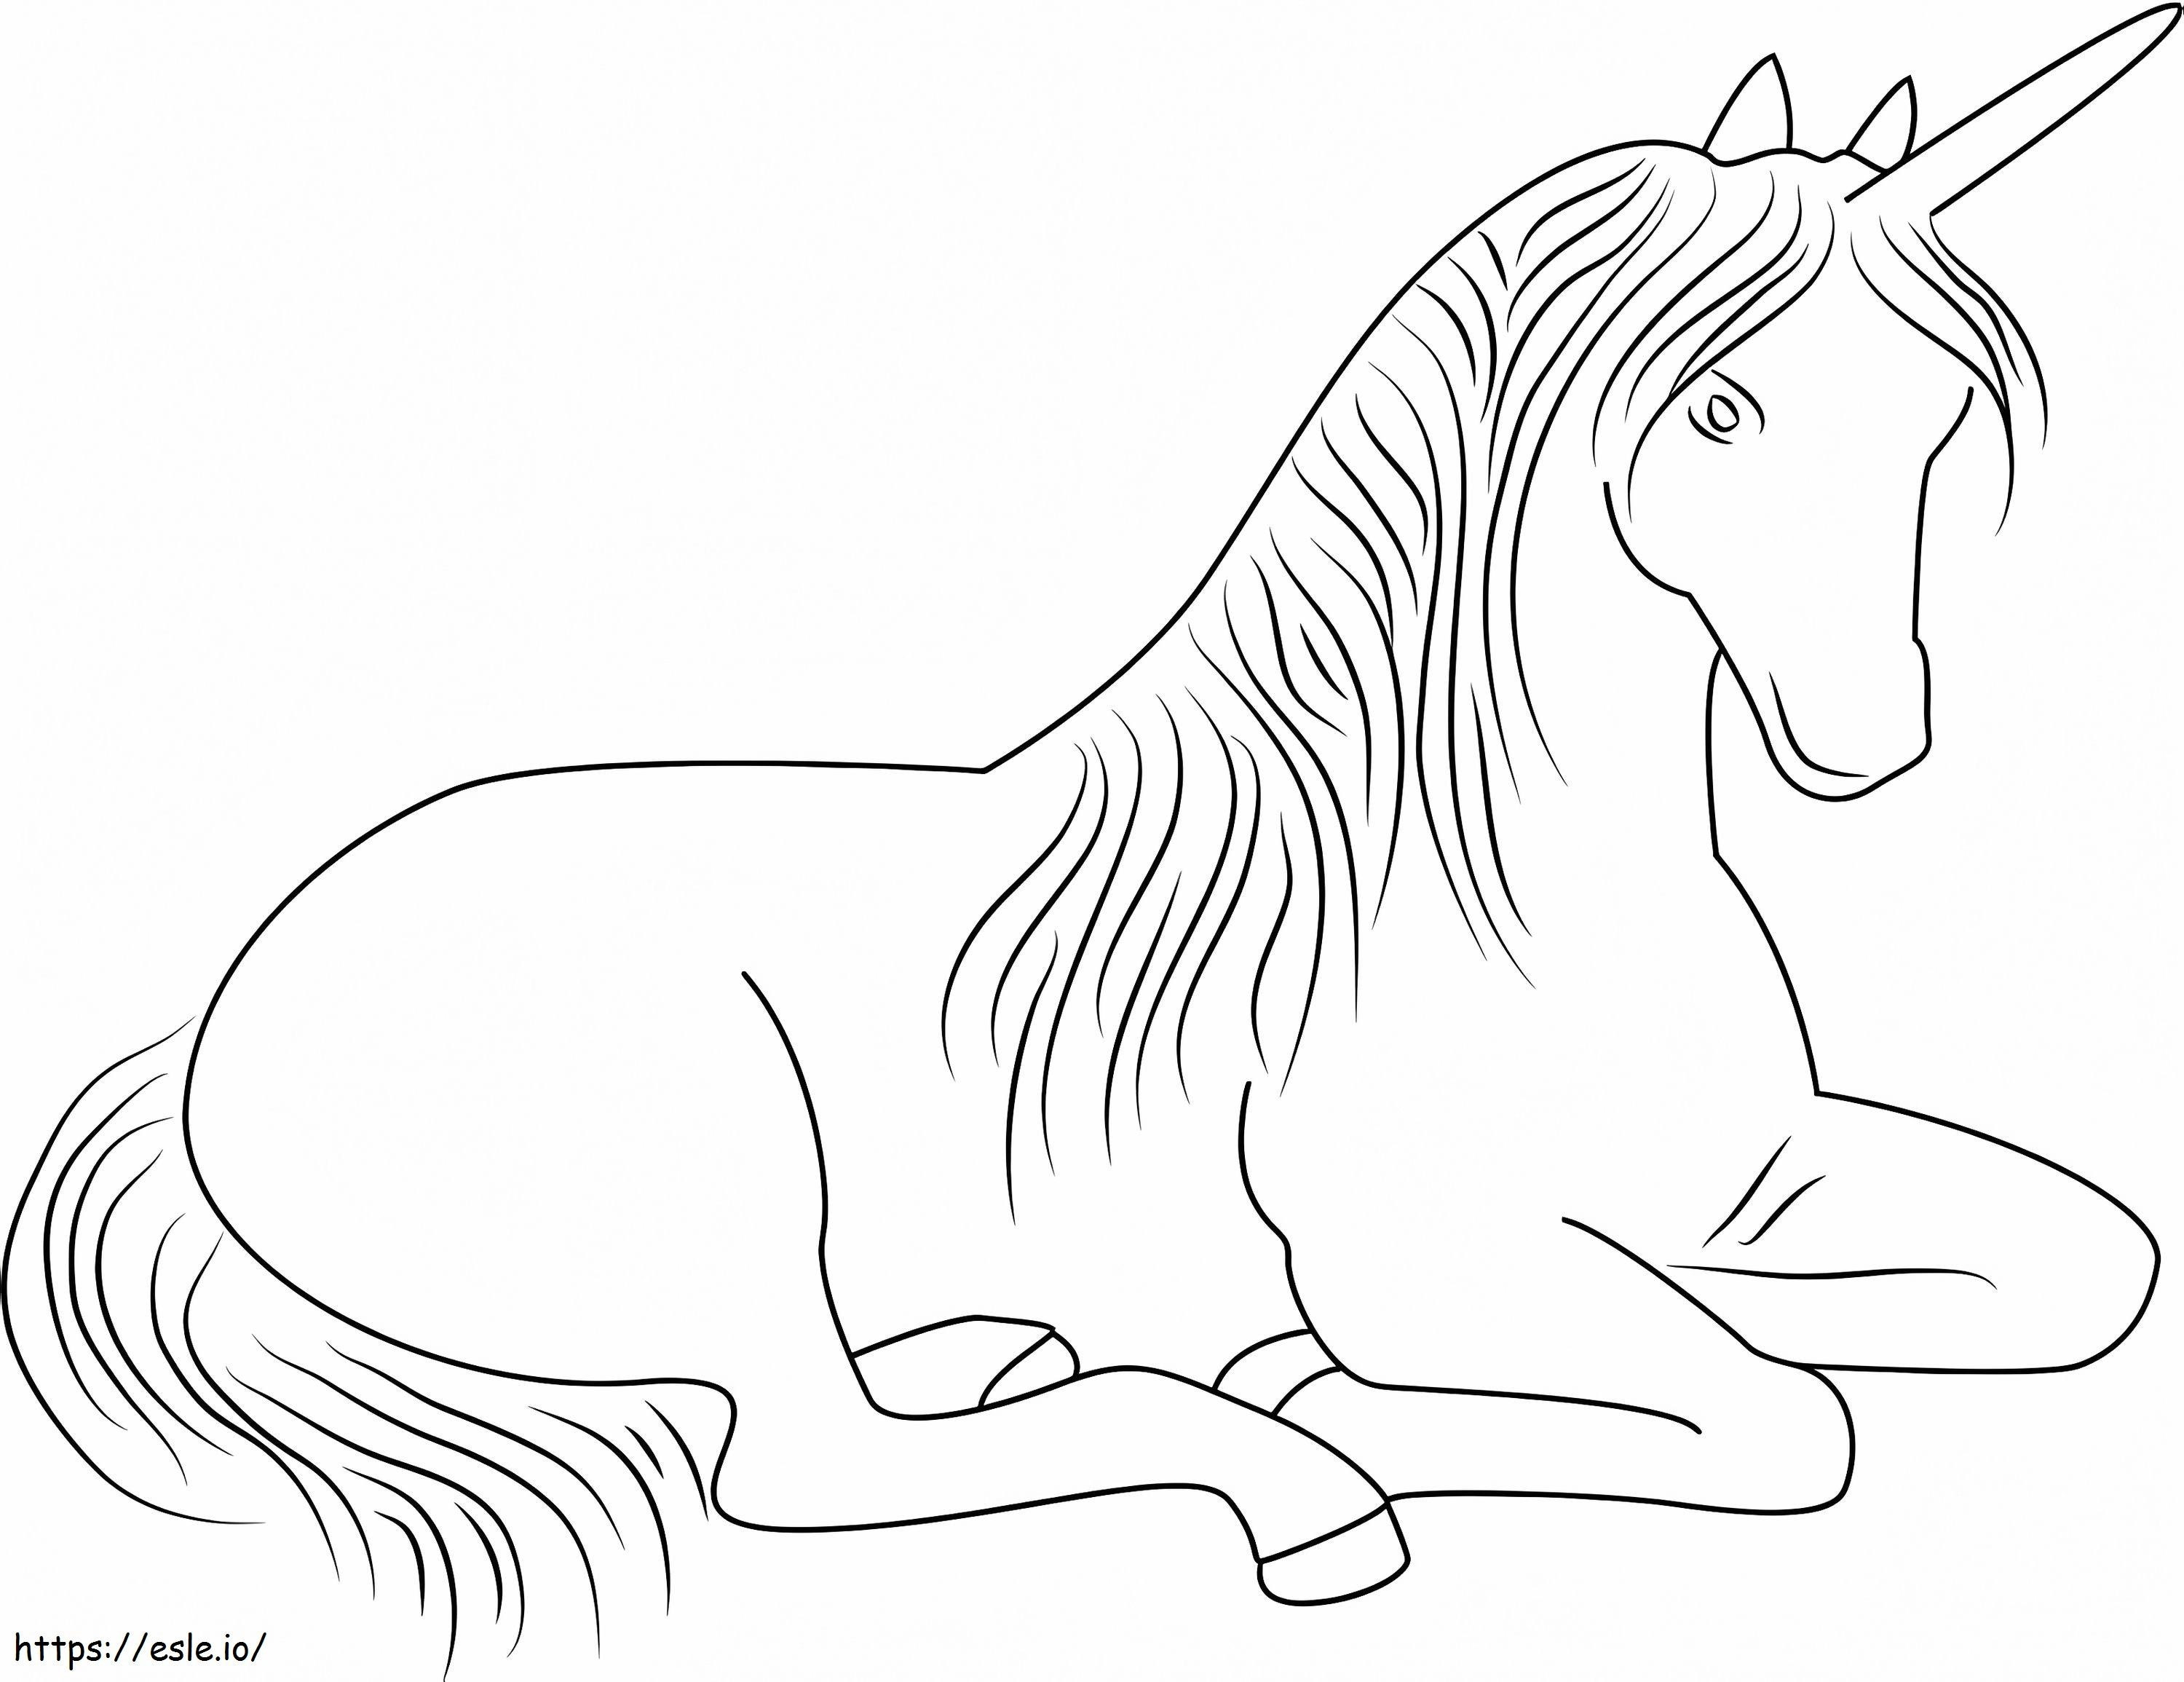 1530149045 Unicorn Sitting coloring page